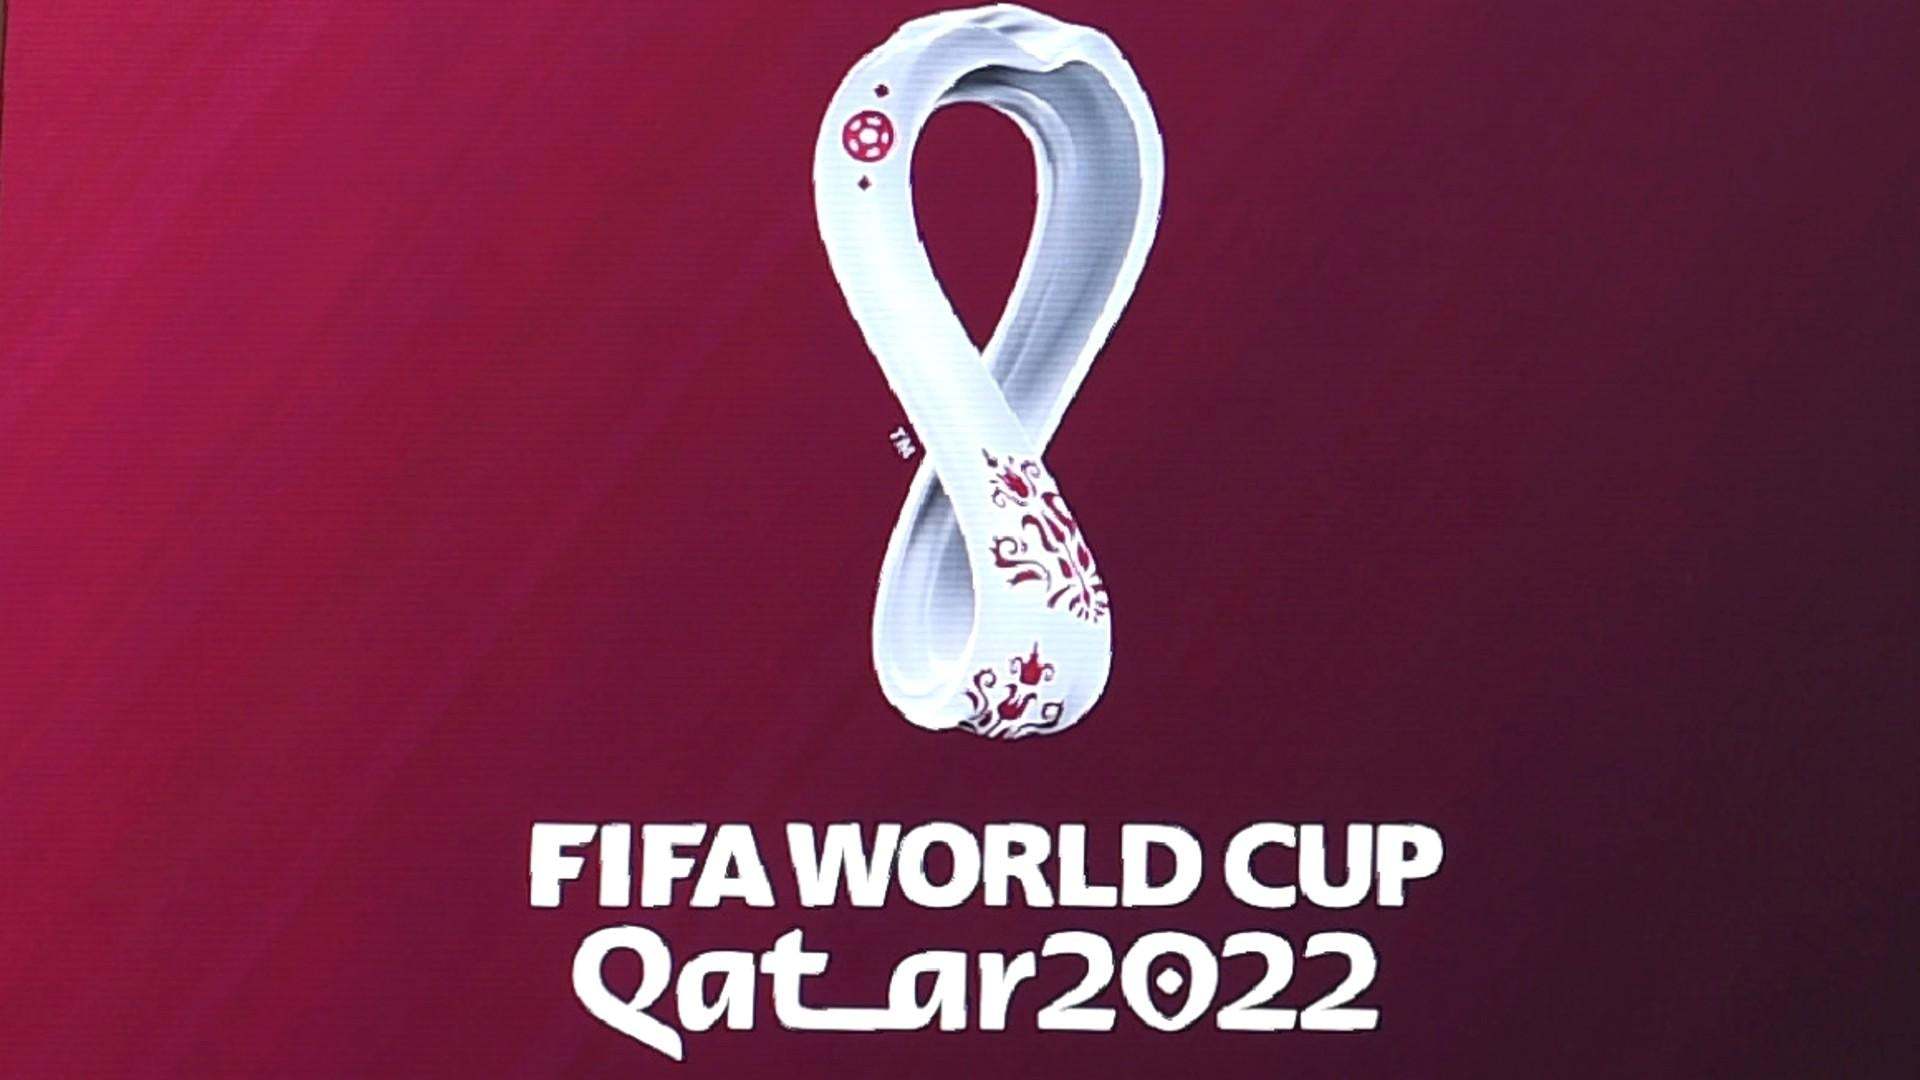 FIFA World Cup’22 – Deals, Qatar’s Preparation - Think24 Gaming & Gadgets Qatar